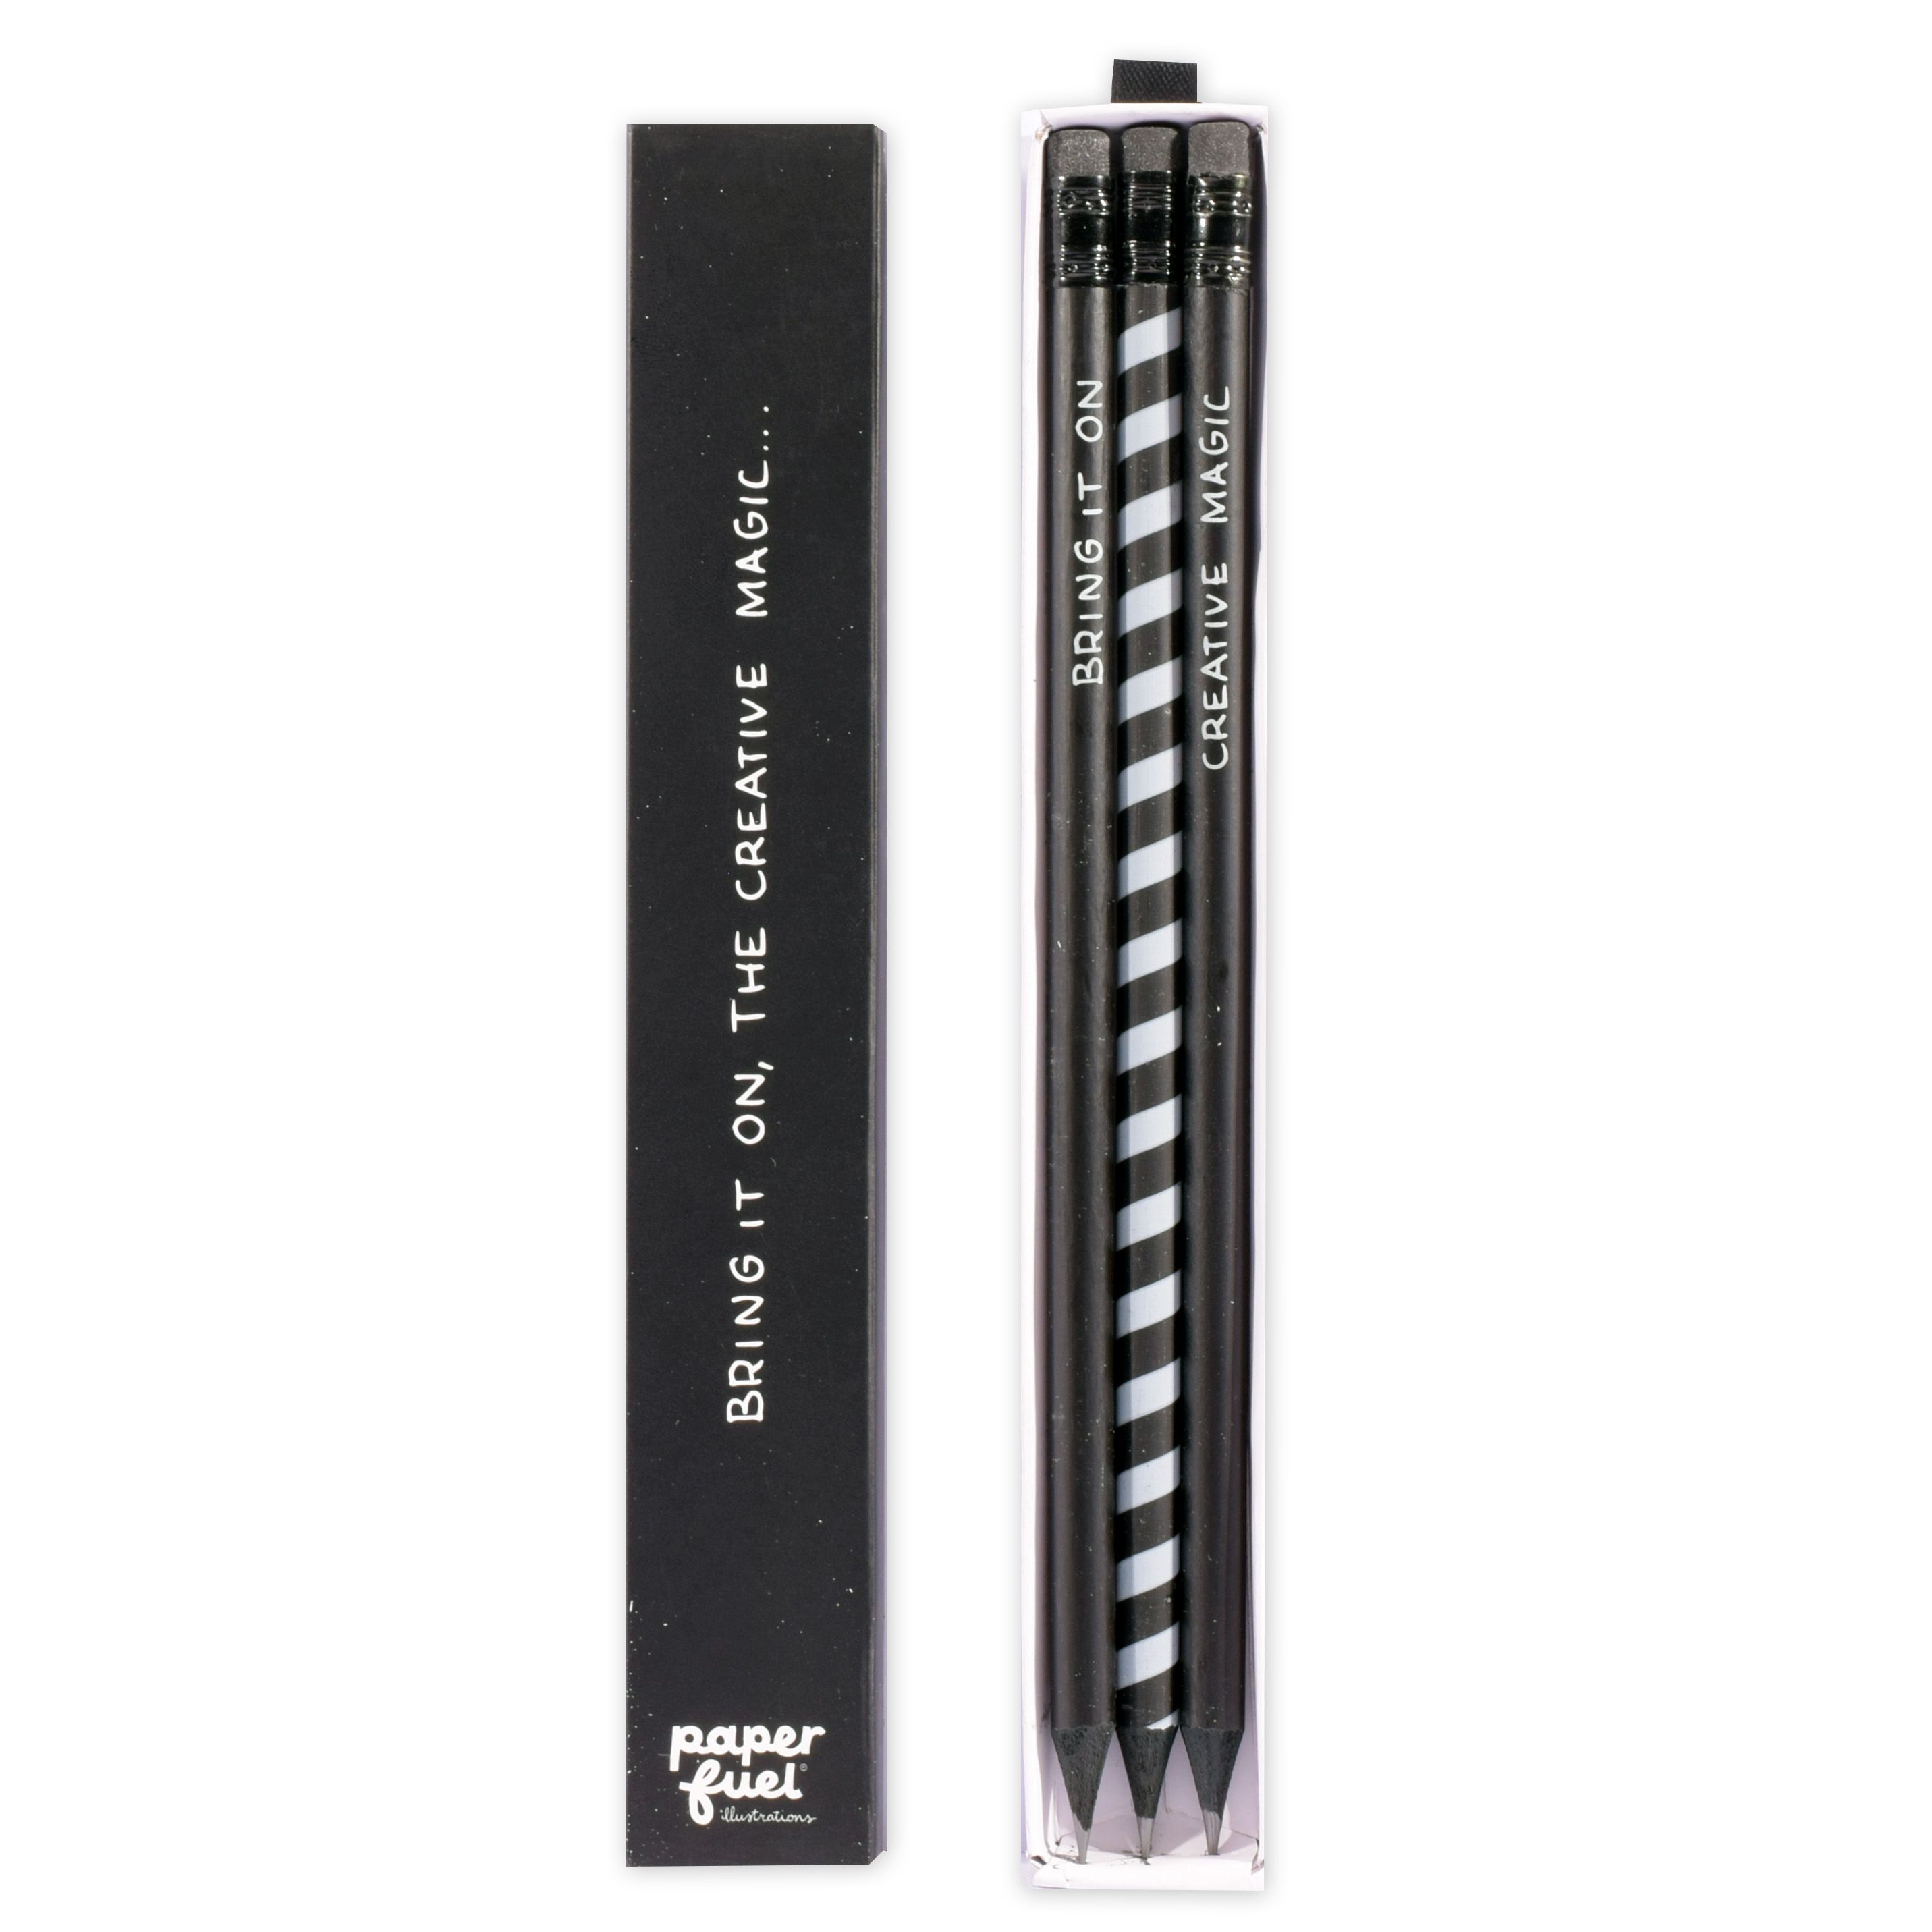 Paperfuel • Pencils set 3pieces